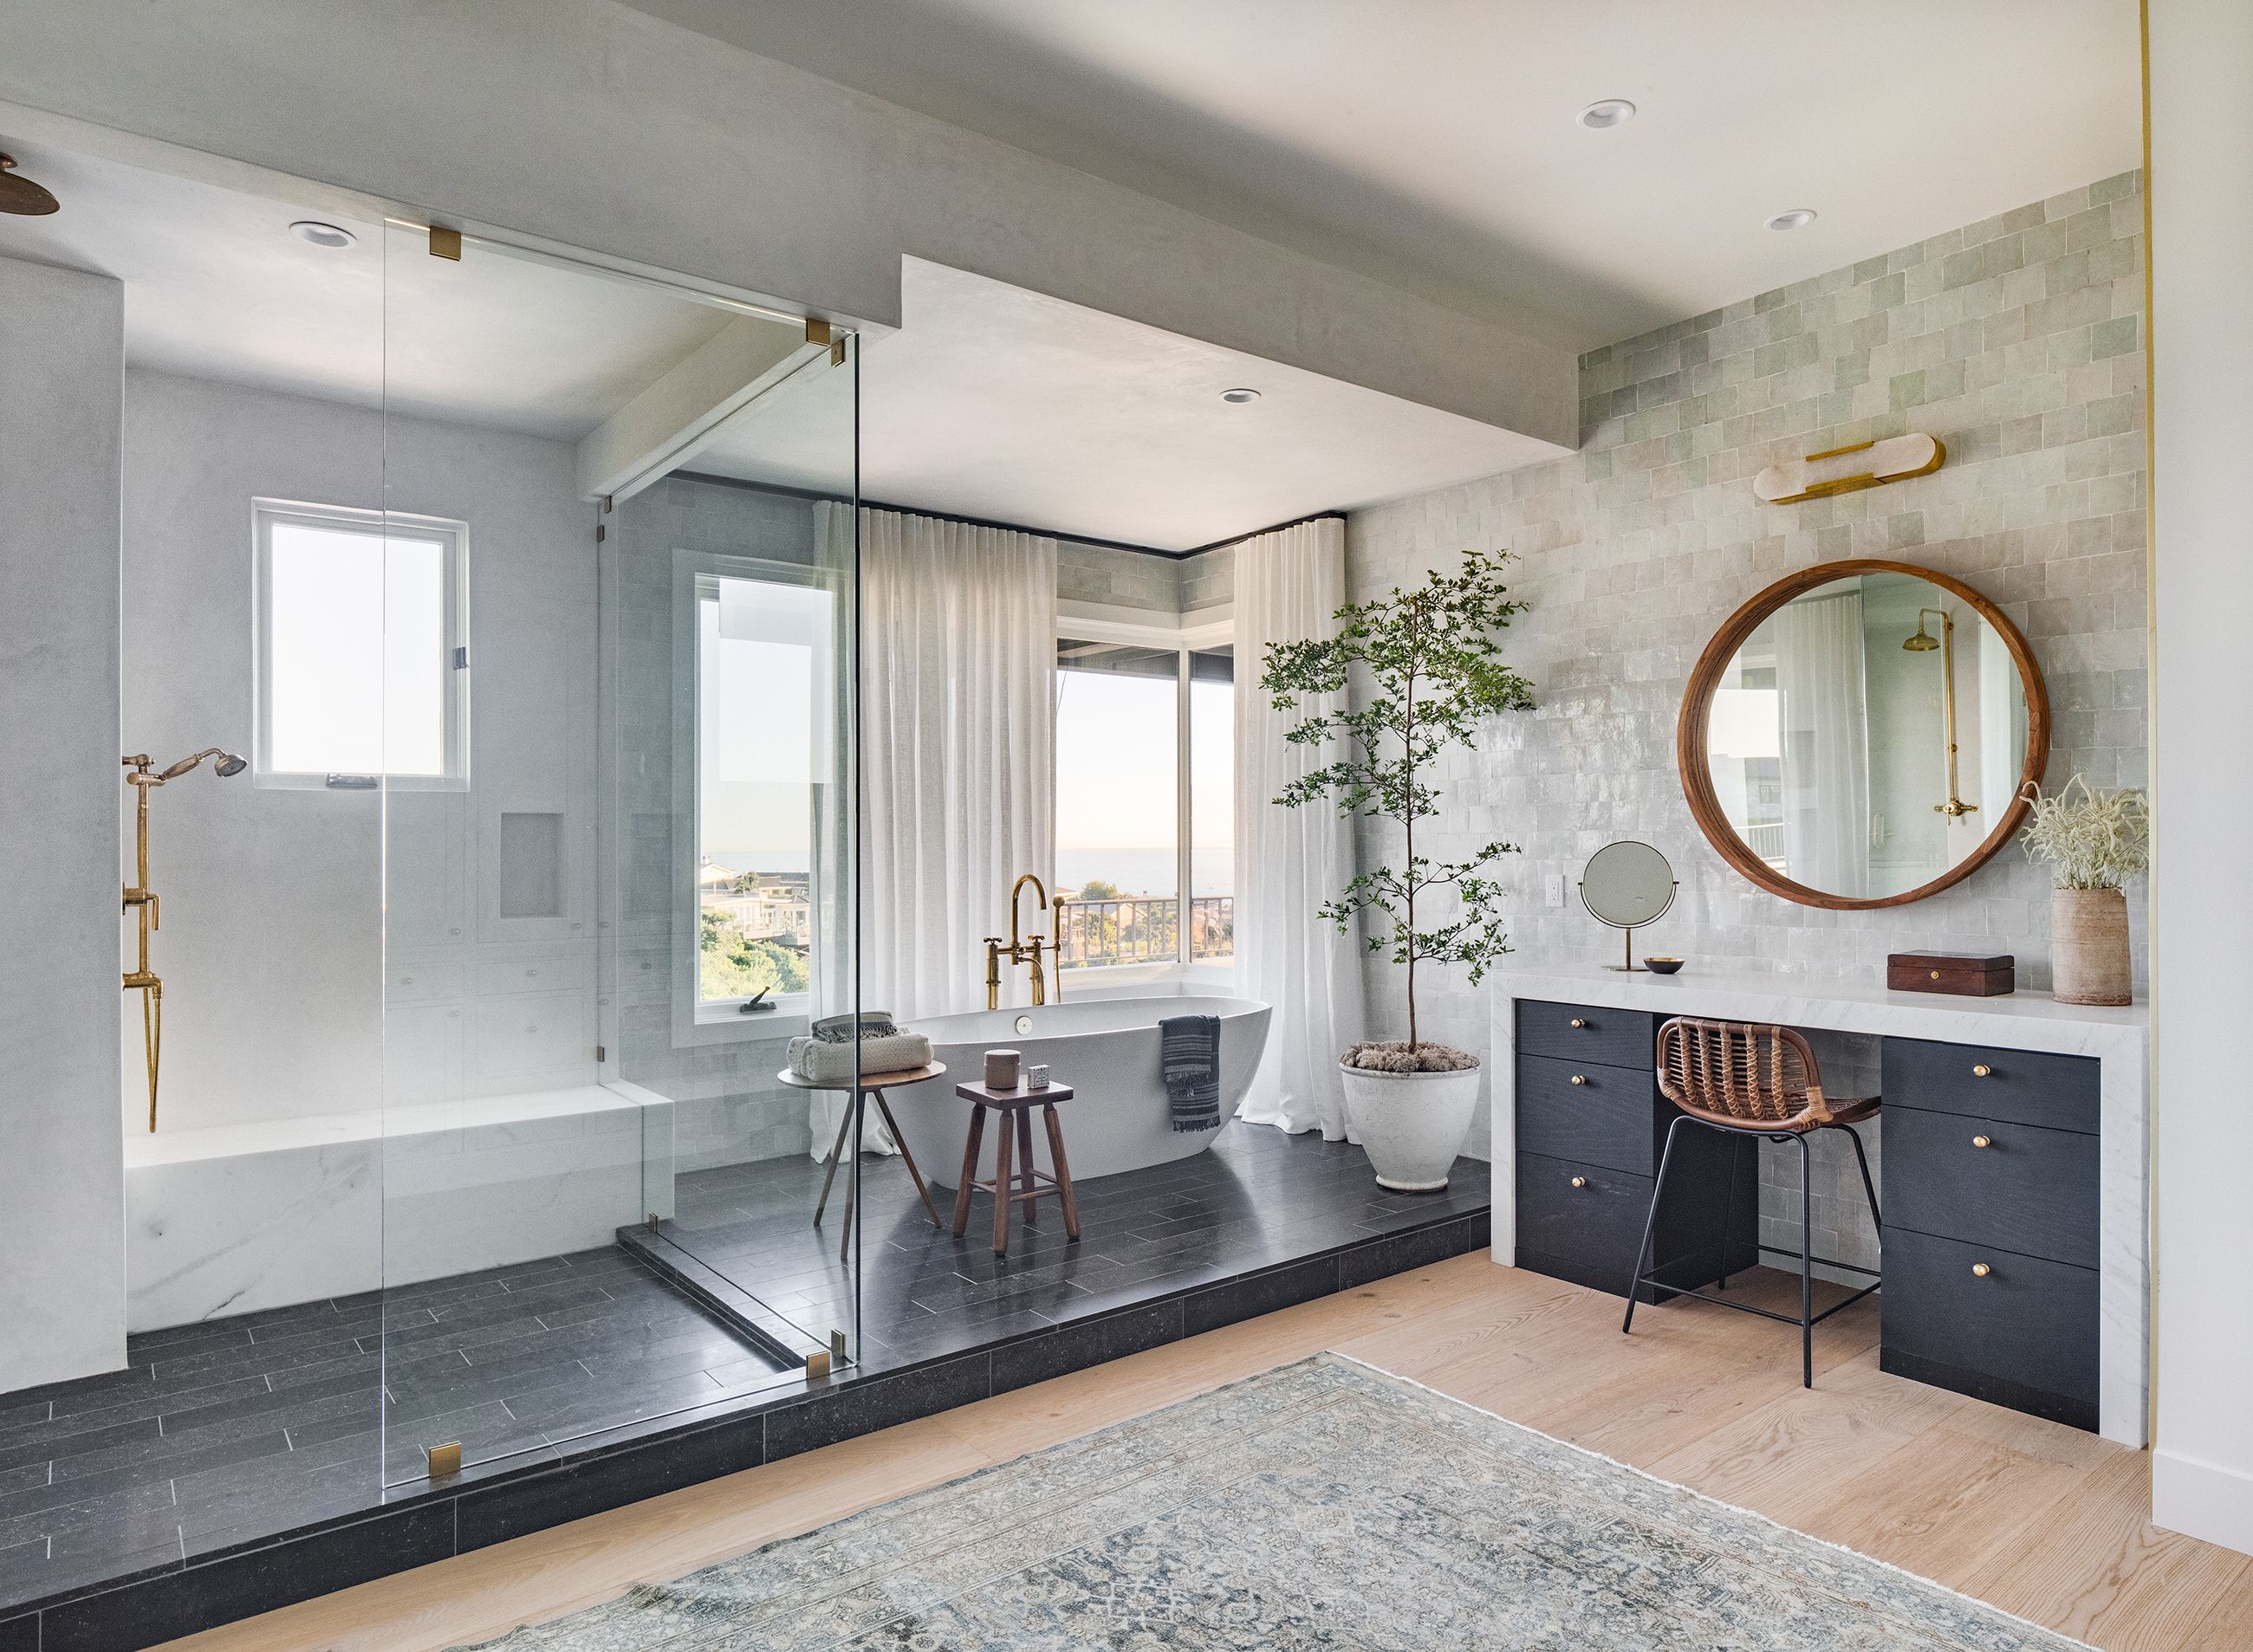 42 Modern Bathrooms - Luxury Bathroom Ideas with Modern Design